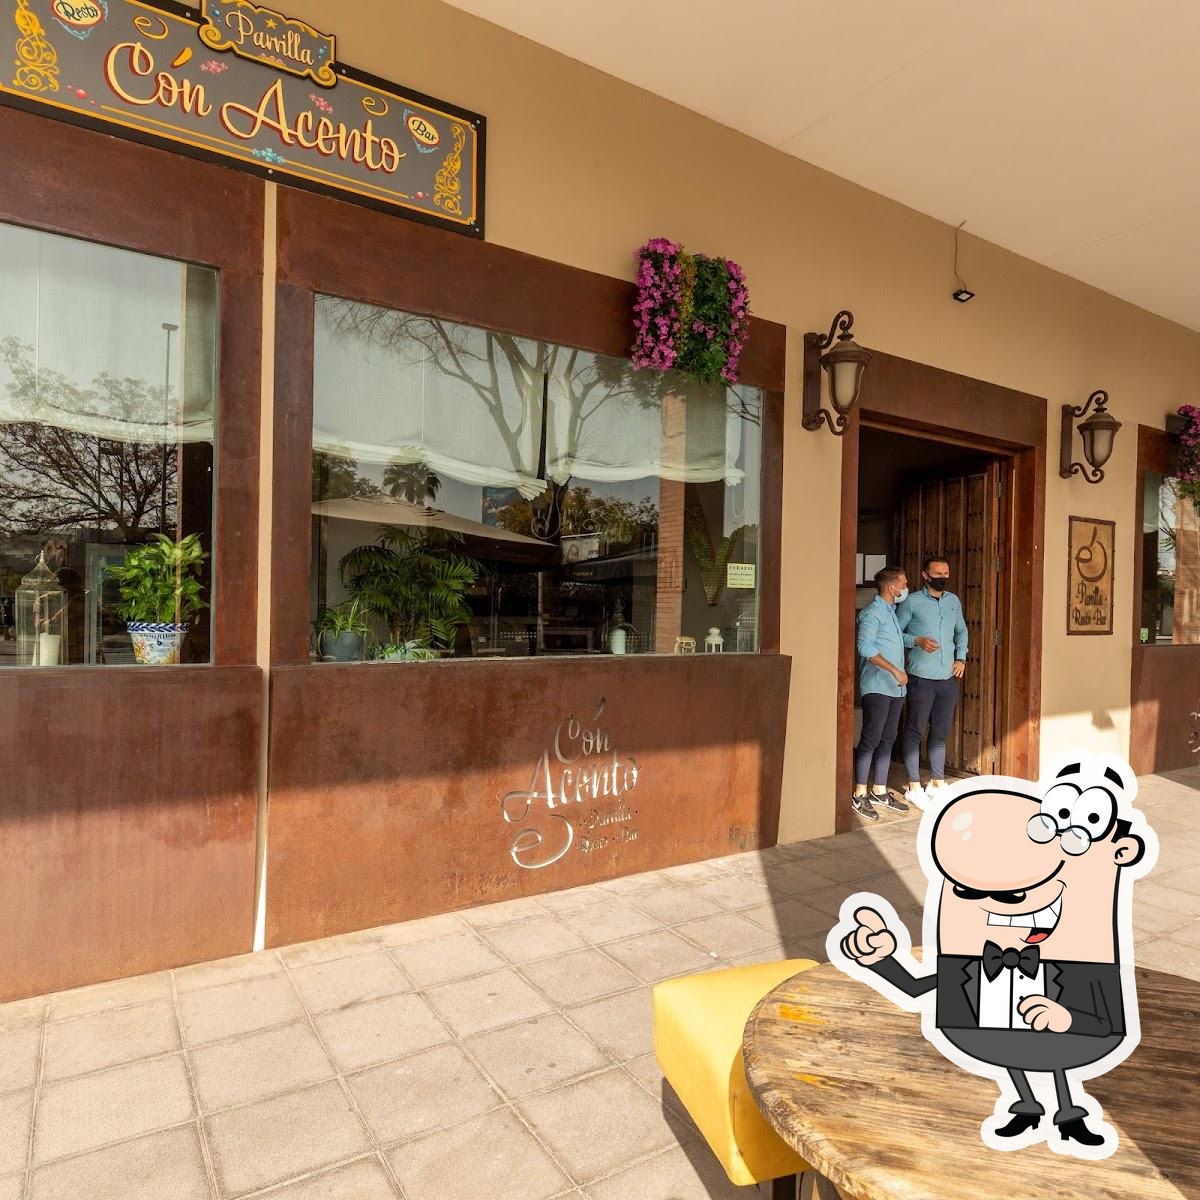 Con Acento RestoBar in Córdoba - Restaurant menu and reviews